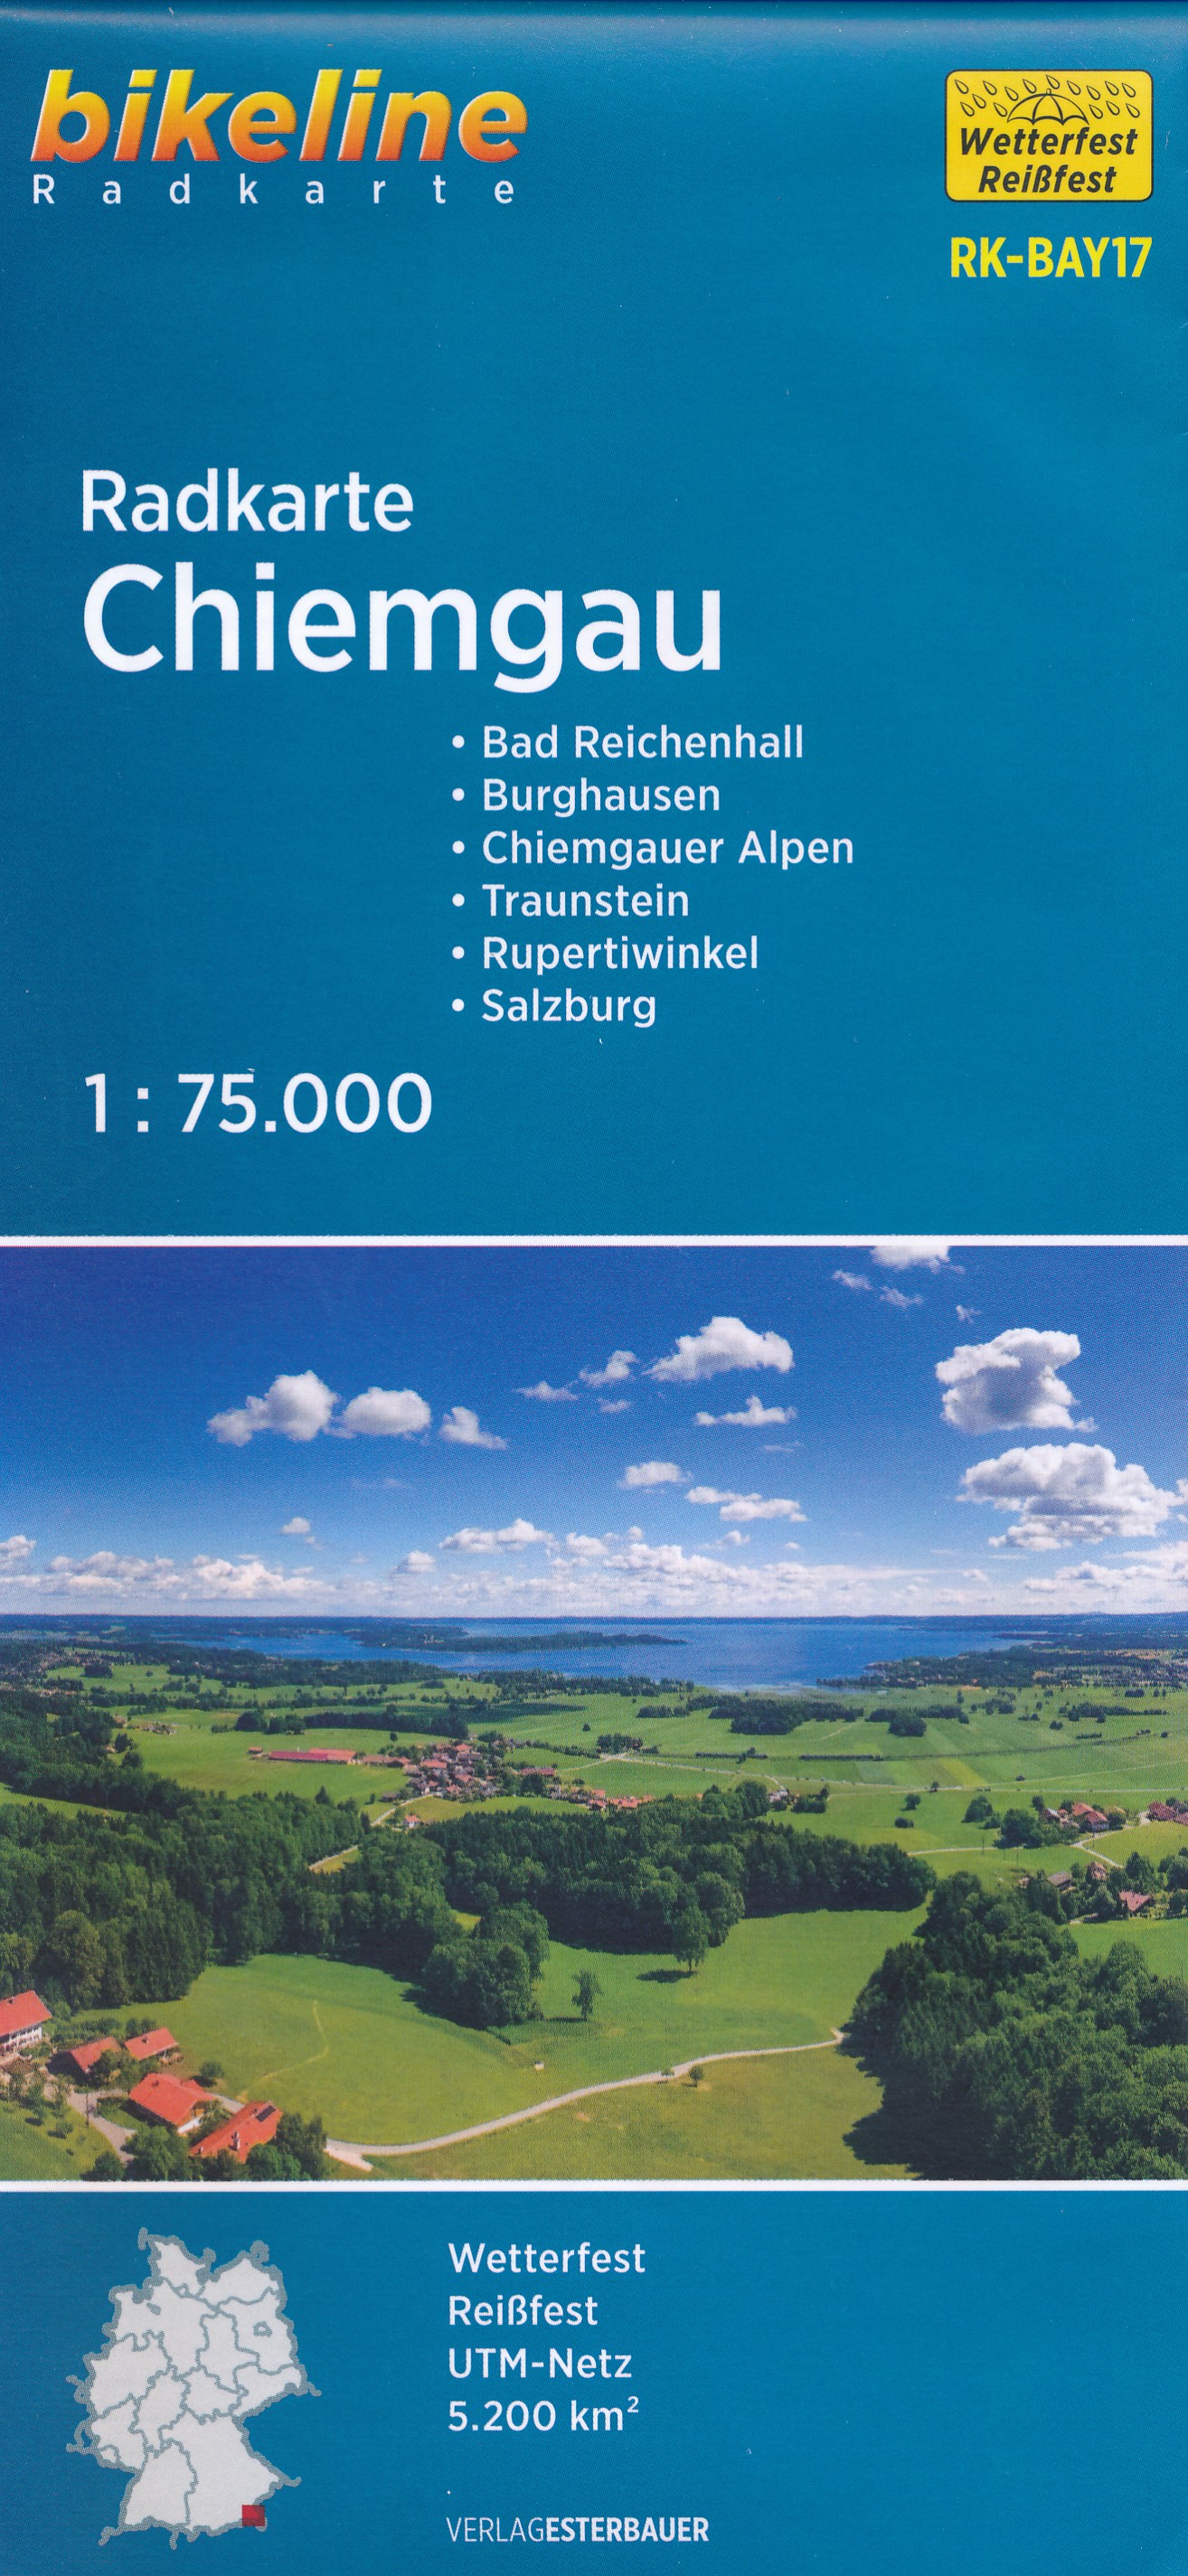 Online bestellen: Fietskaart BAY17 Bikeline Radkarte Chiemgau | Esterbauer